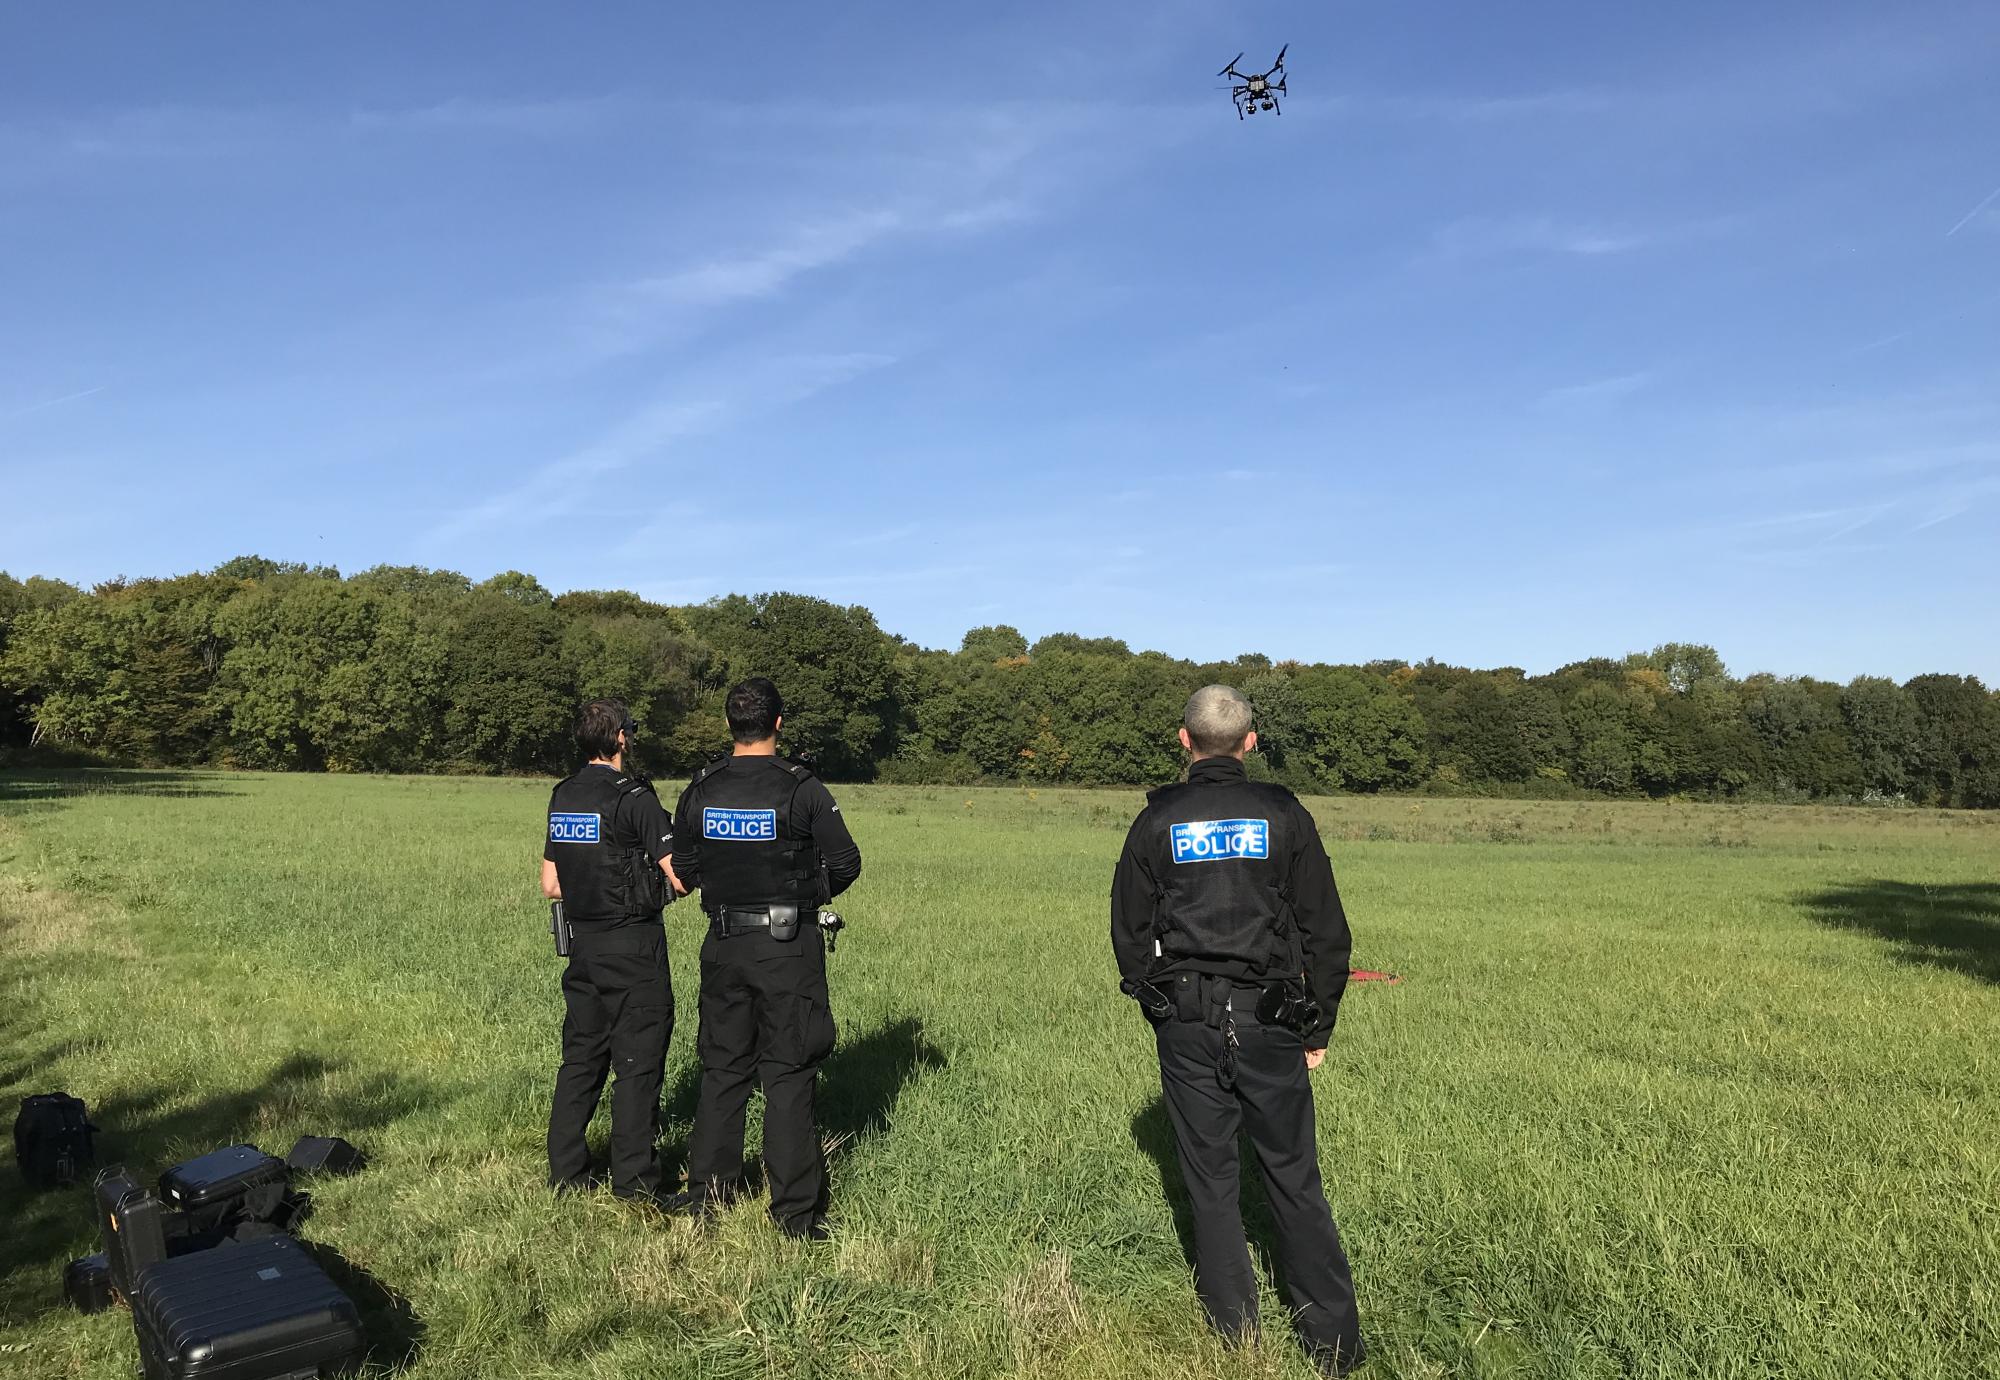 BTP drones in use, via Network Rail 